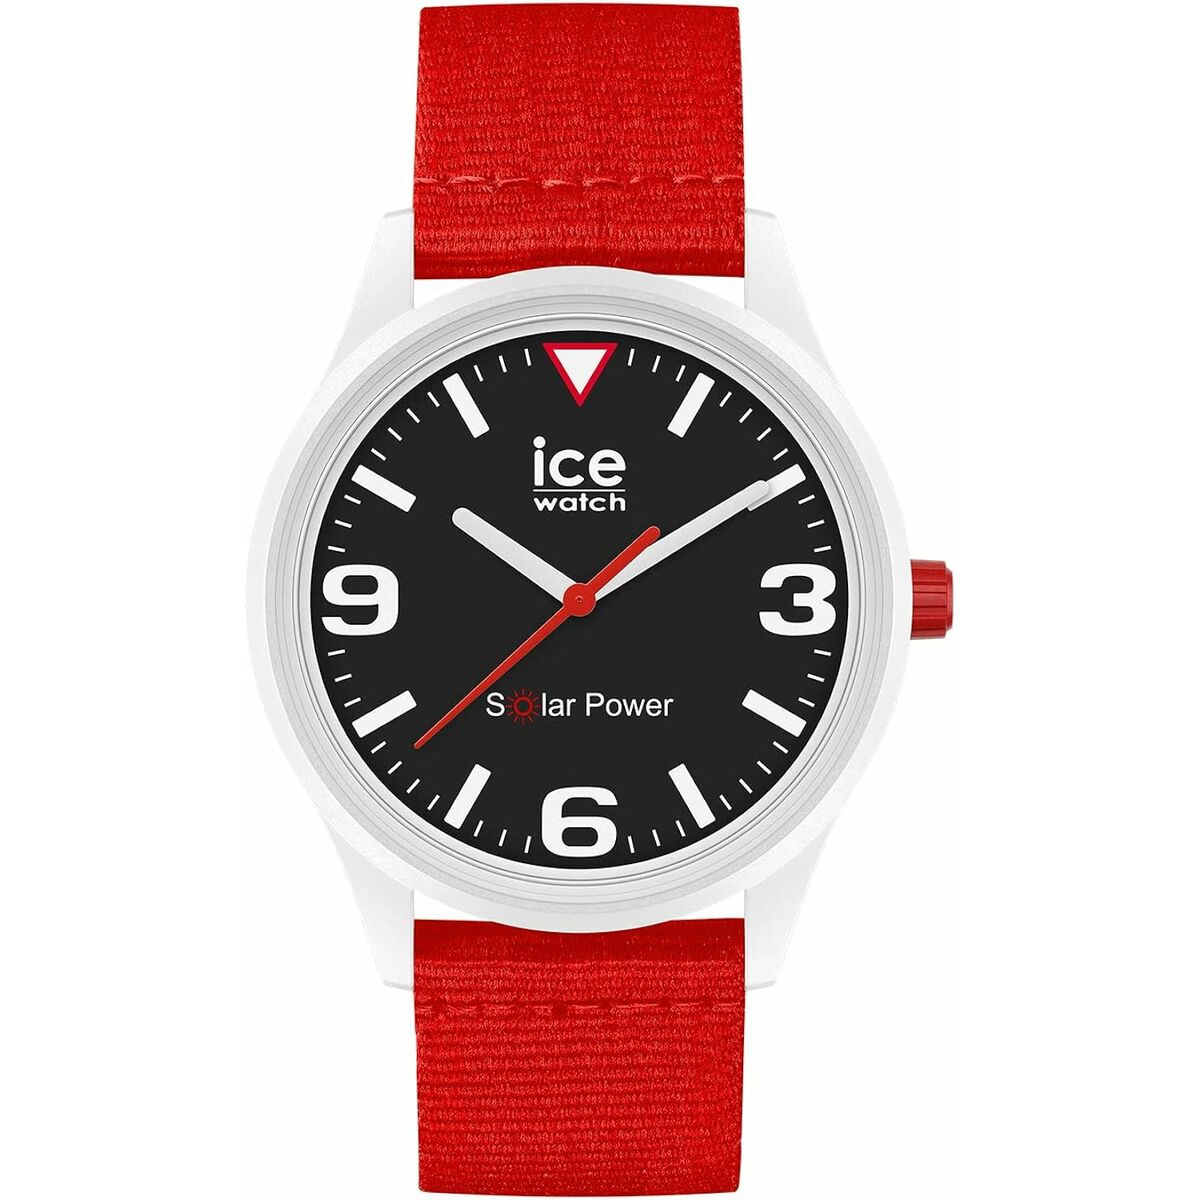 RELOJ ANALOGICO DE HOMBRES ICE IC020061 Ice watch